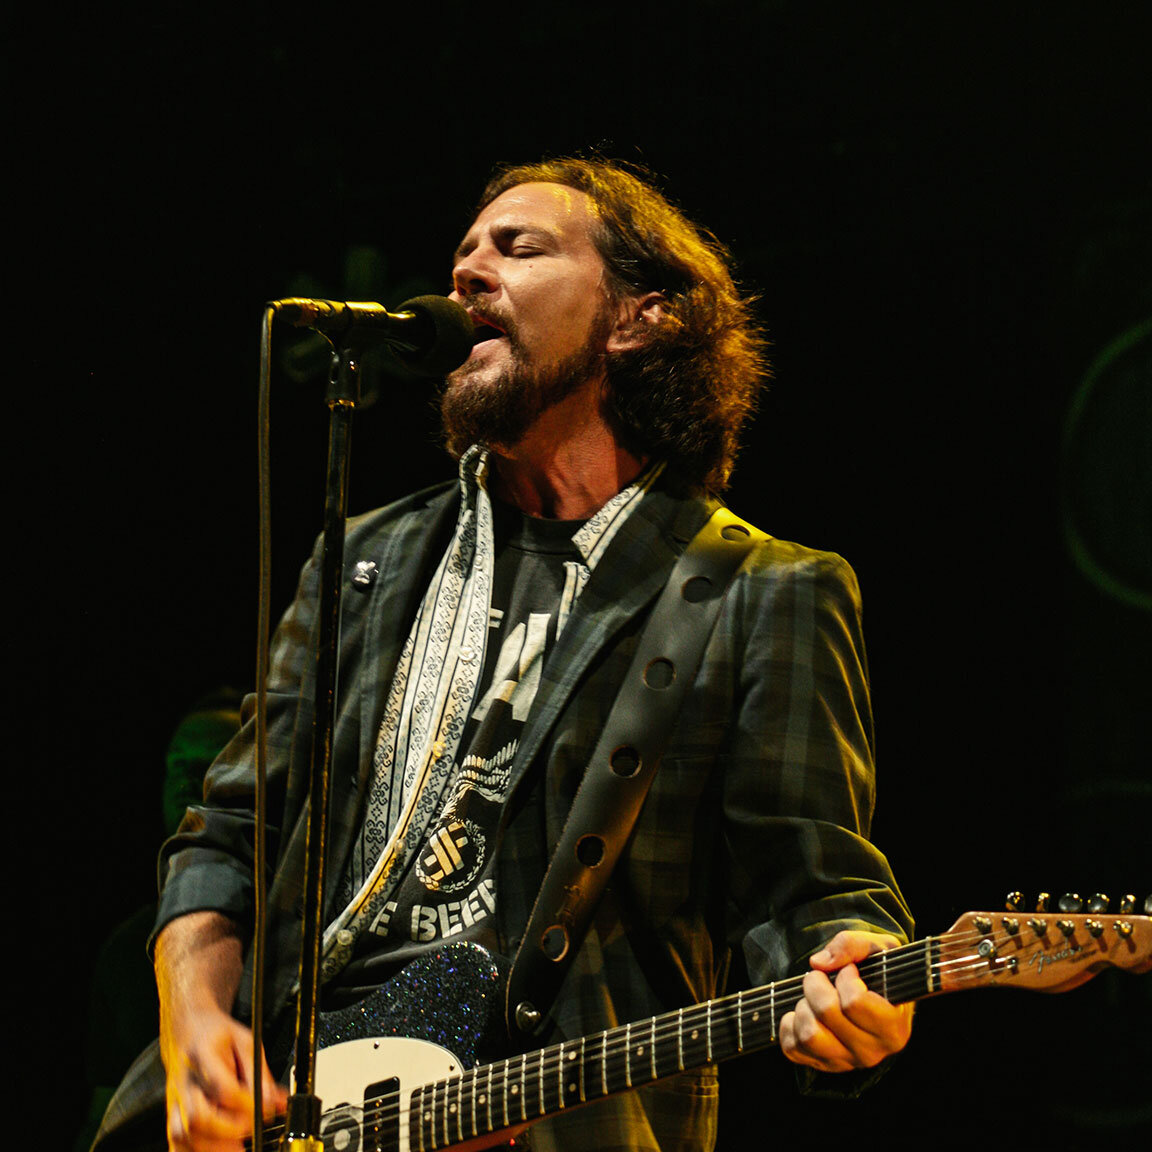  Eddie Vedder of Pearl Jam for The Stranger Newspaper. Seattle, WA 